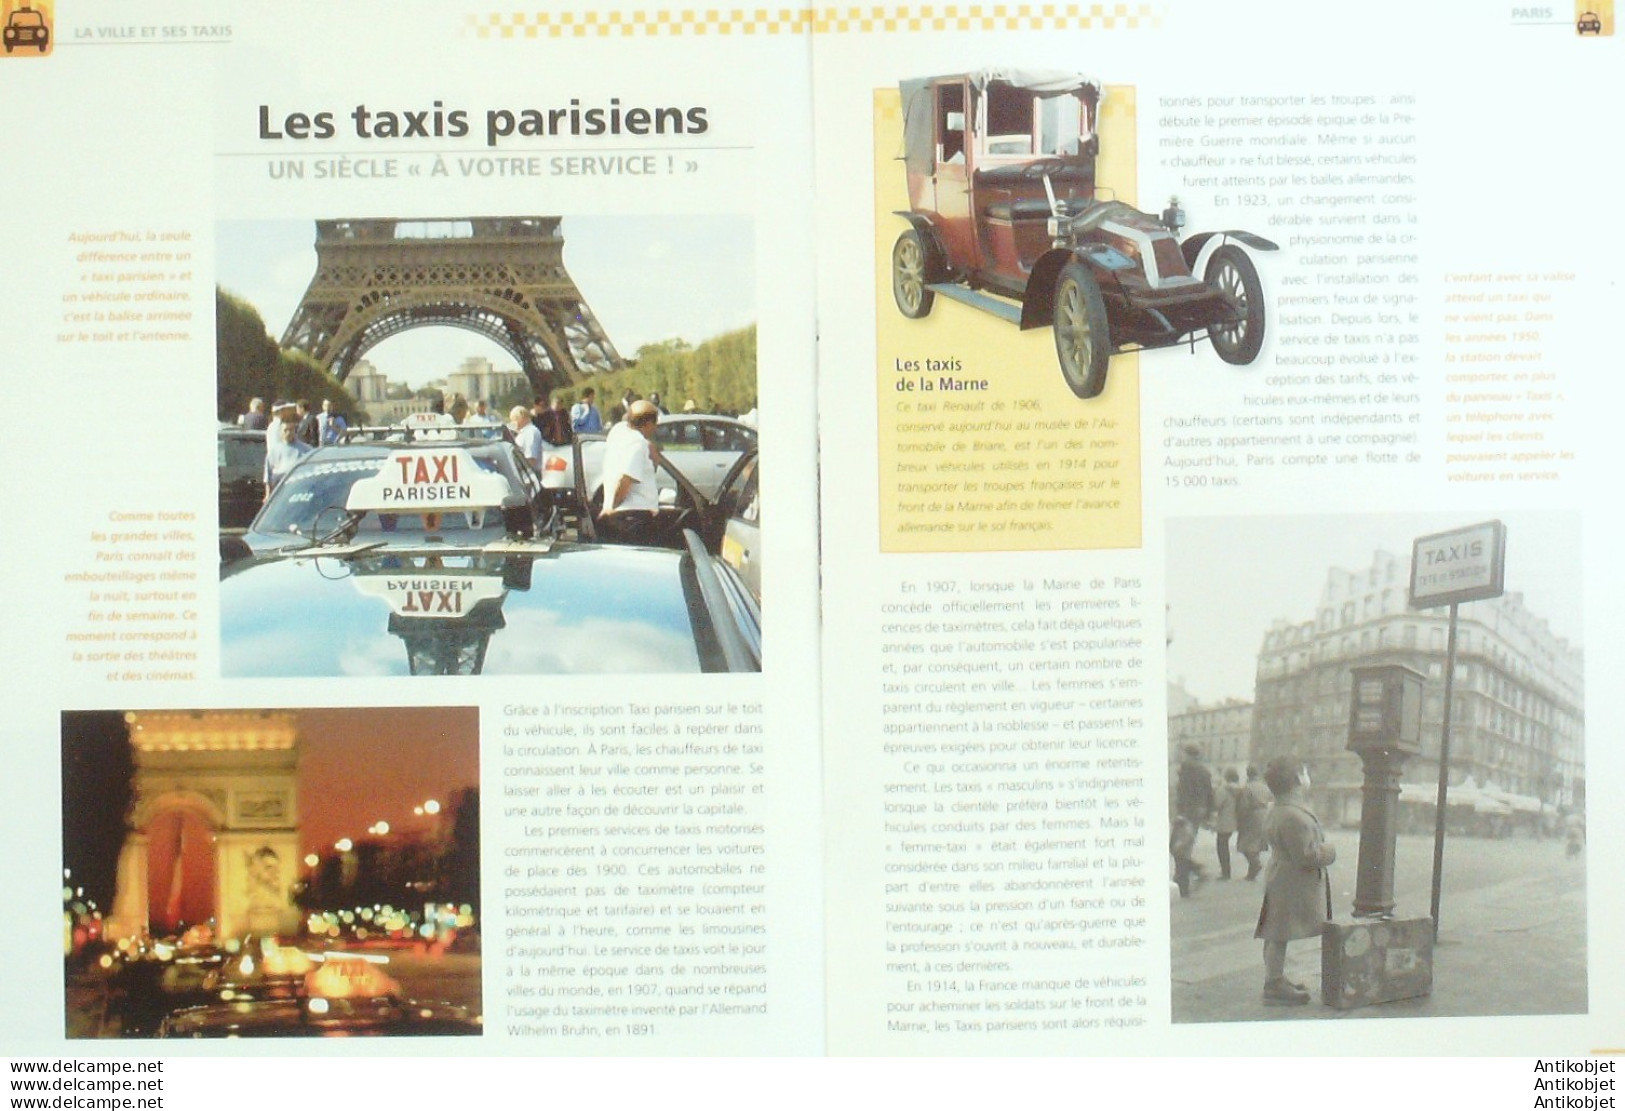 Taxis Du Monde Panhard Dyna Z édition Hachette - Geschiedenis